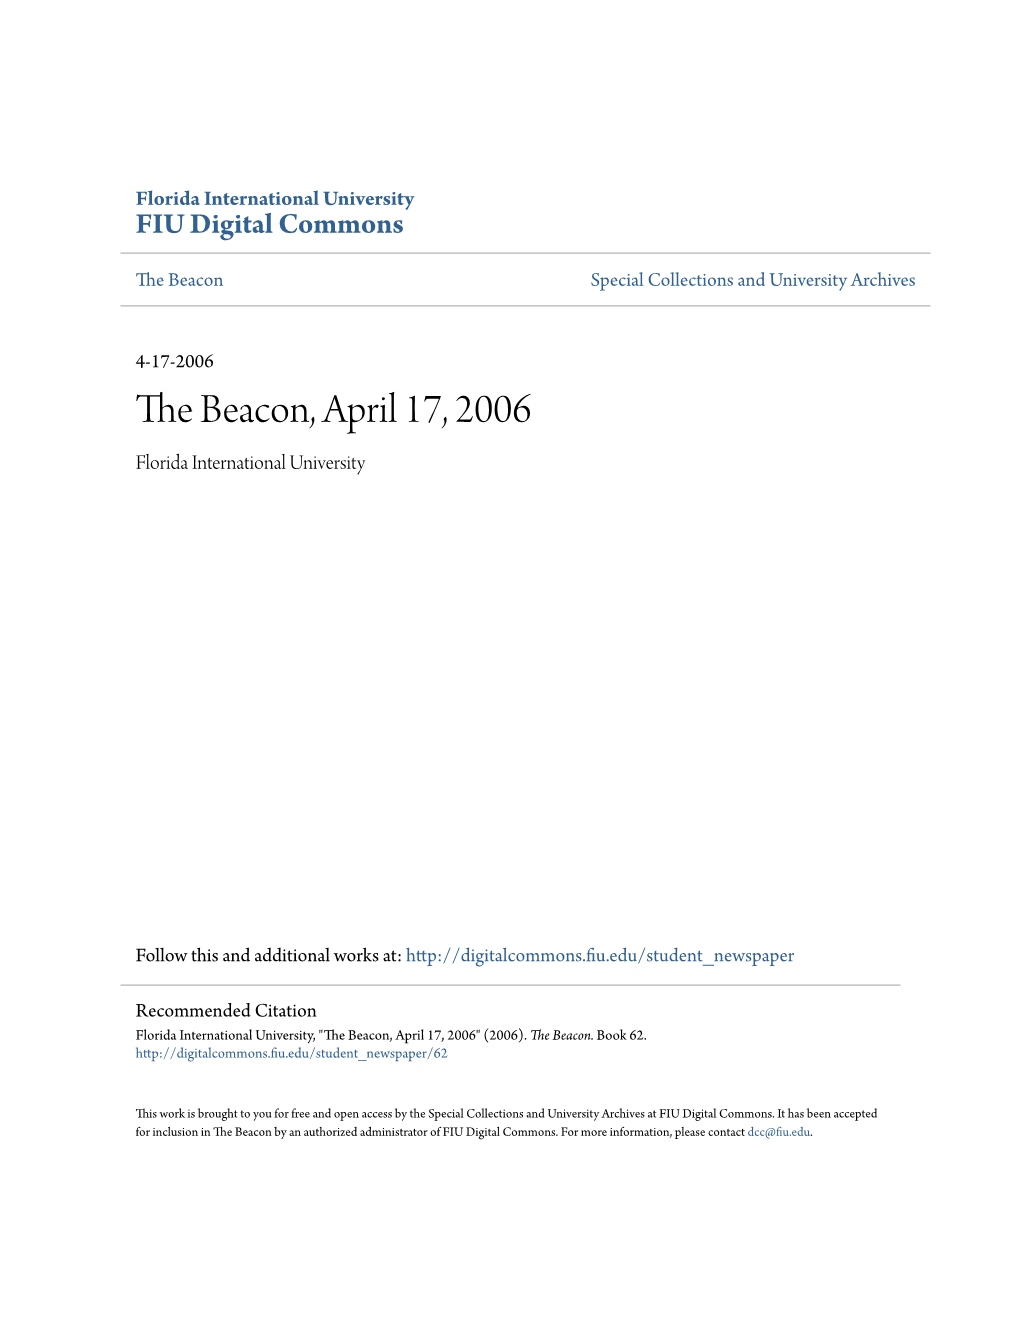 The Beacon, April 17, 2006 Florida International University